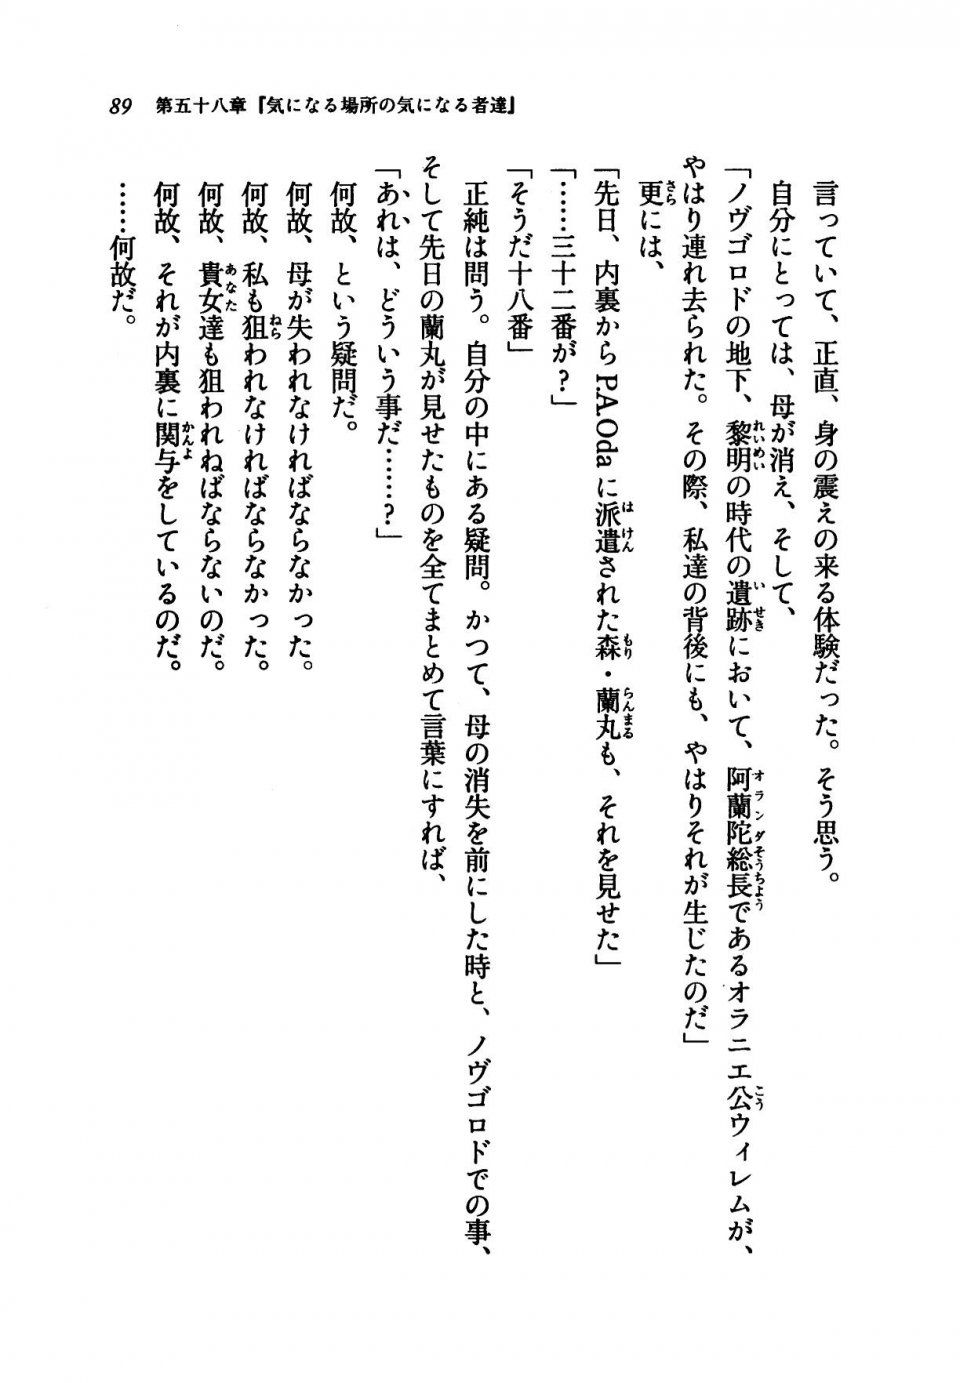 Kyoukai Senjou no Horizon LN Vol 21(8C) Part 1 - Photo #88